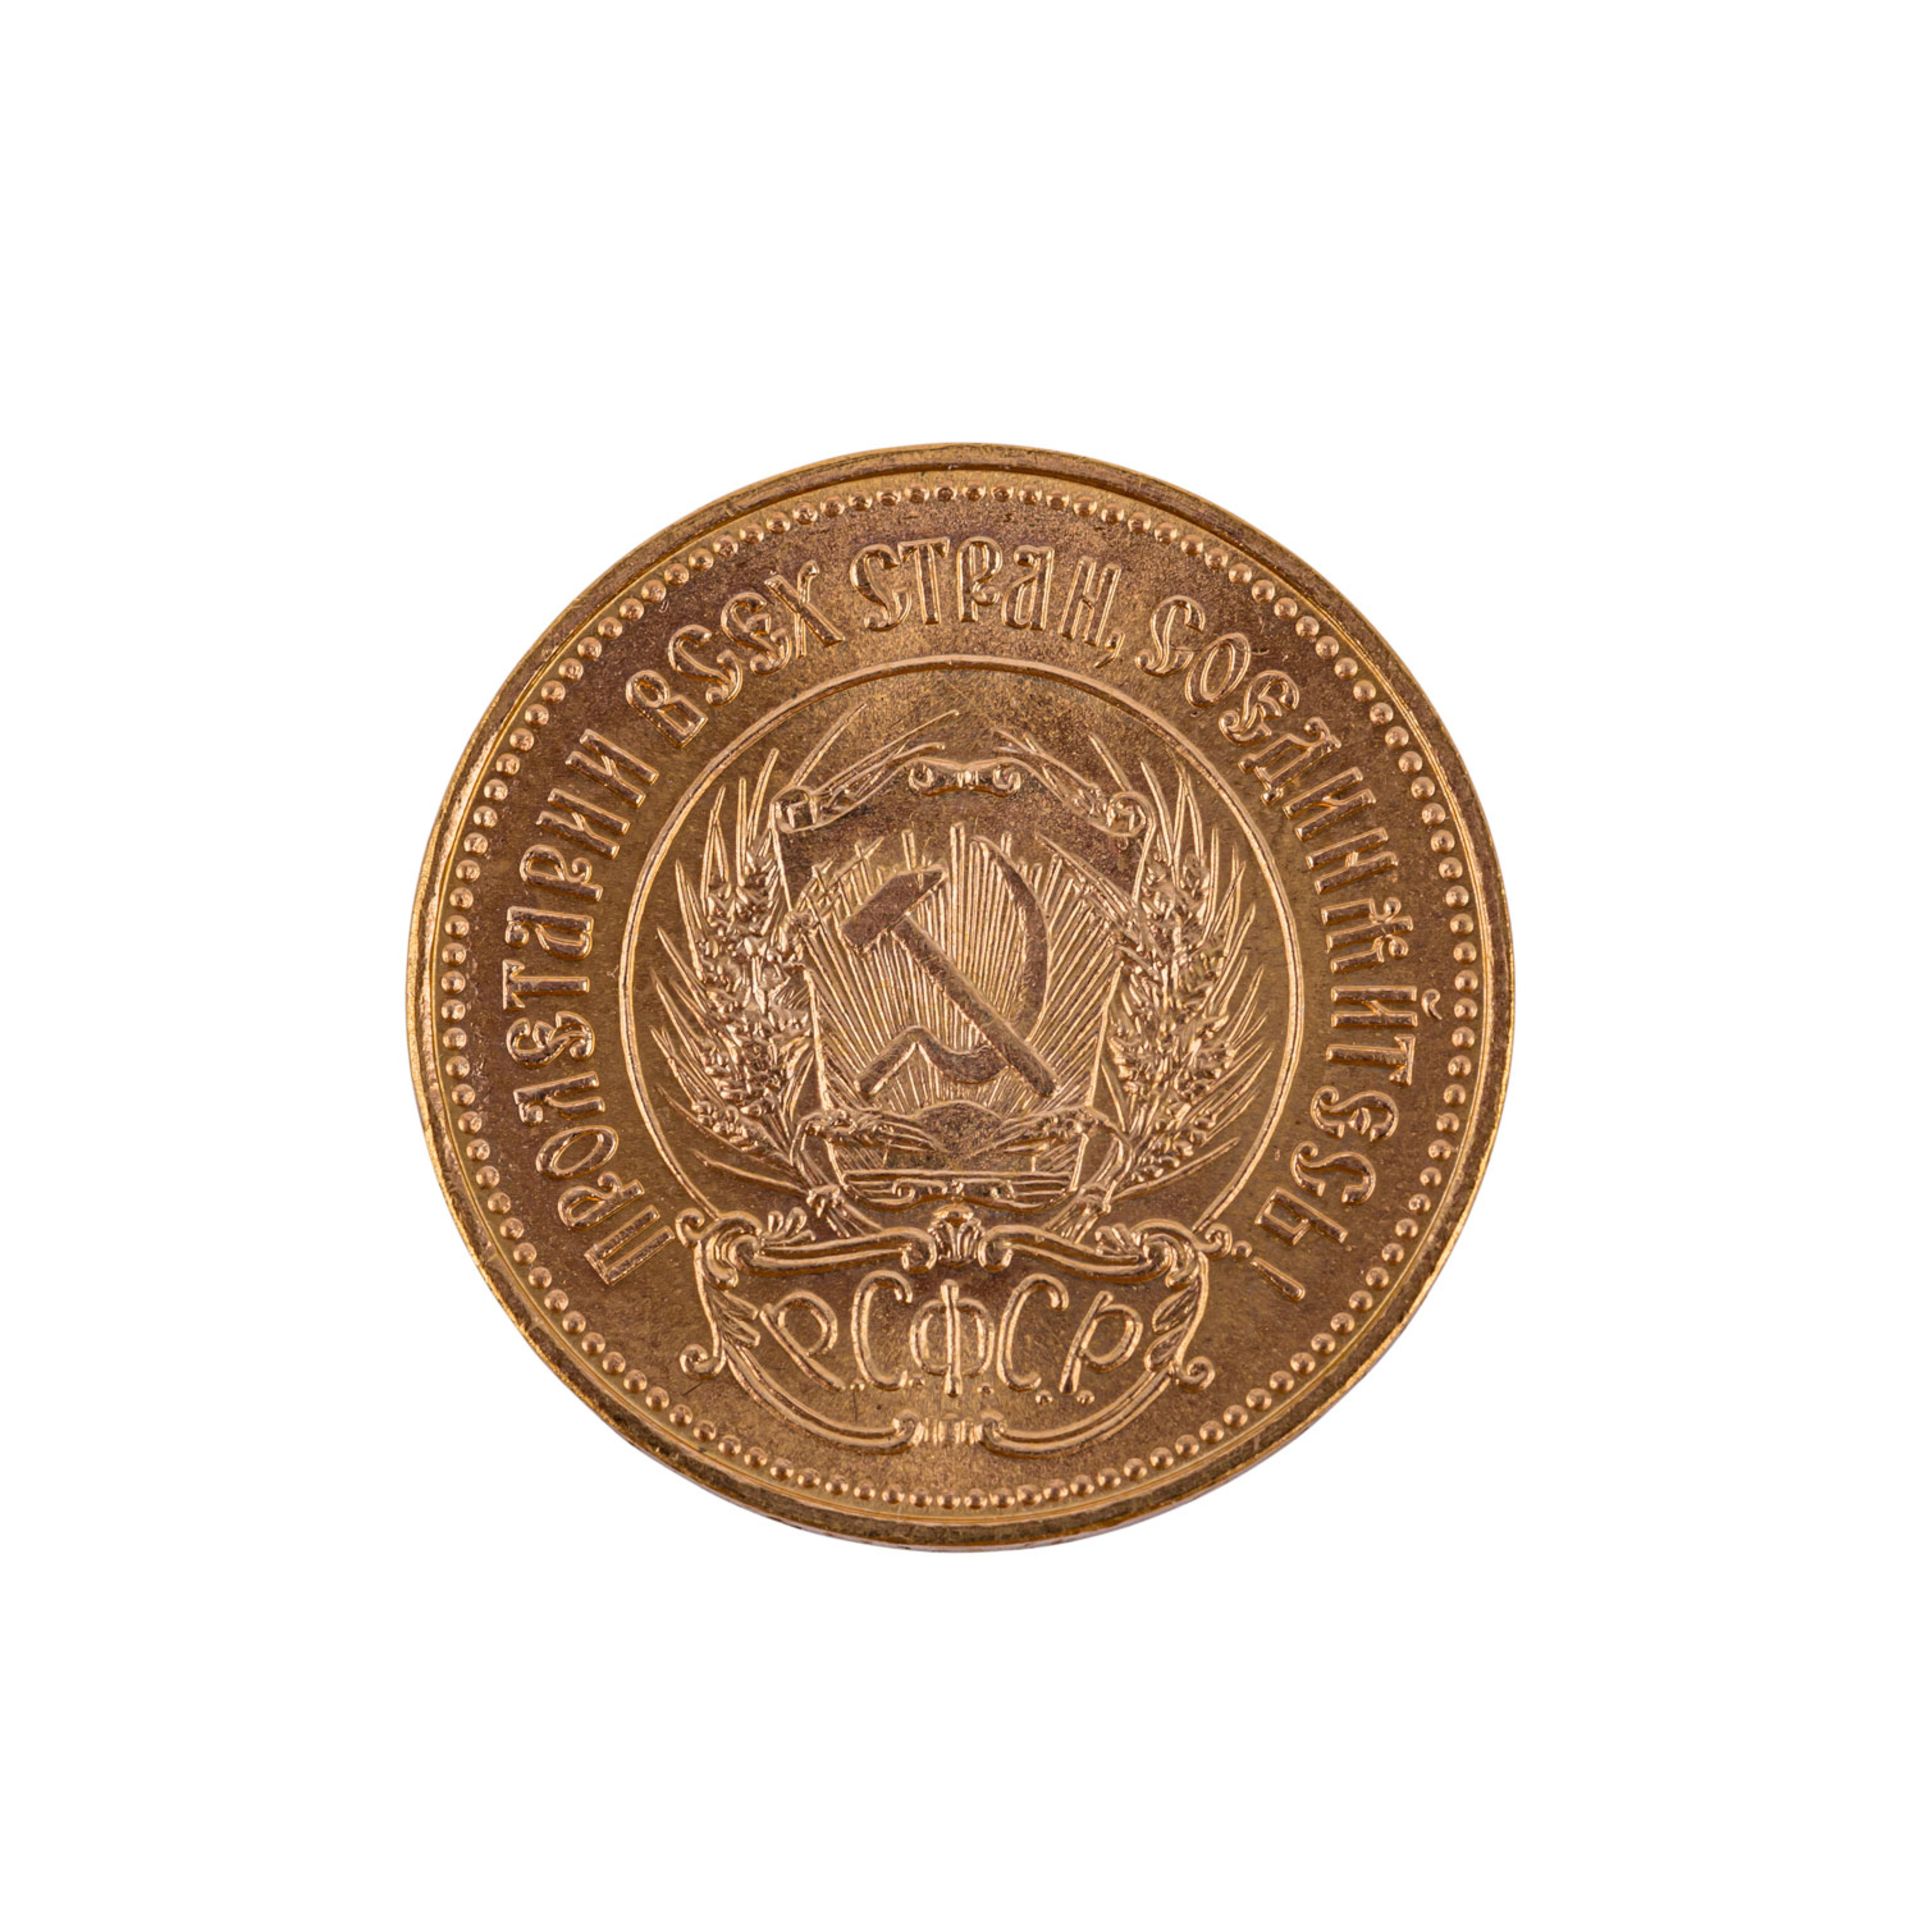 Russland/GOLD - 10 Rubel 1976, Tscherwonetz, vz.,7,74g GOLD fein.Russia/GOLD - 10 Roubles 1976 - Bild 2 aus 2